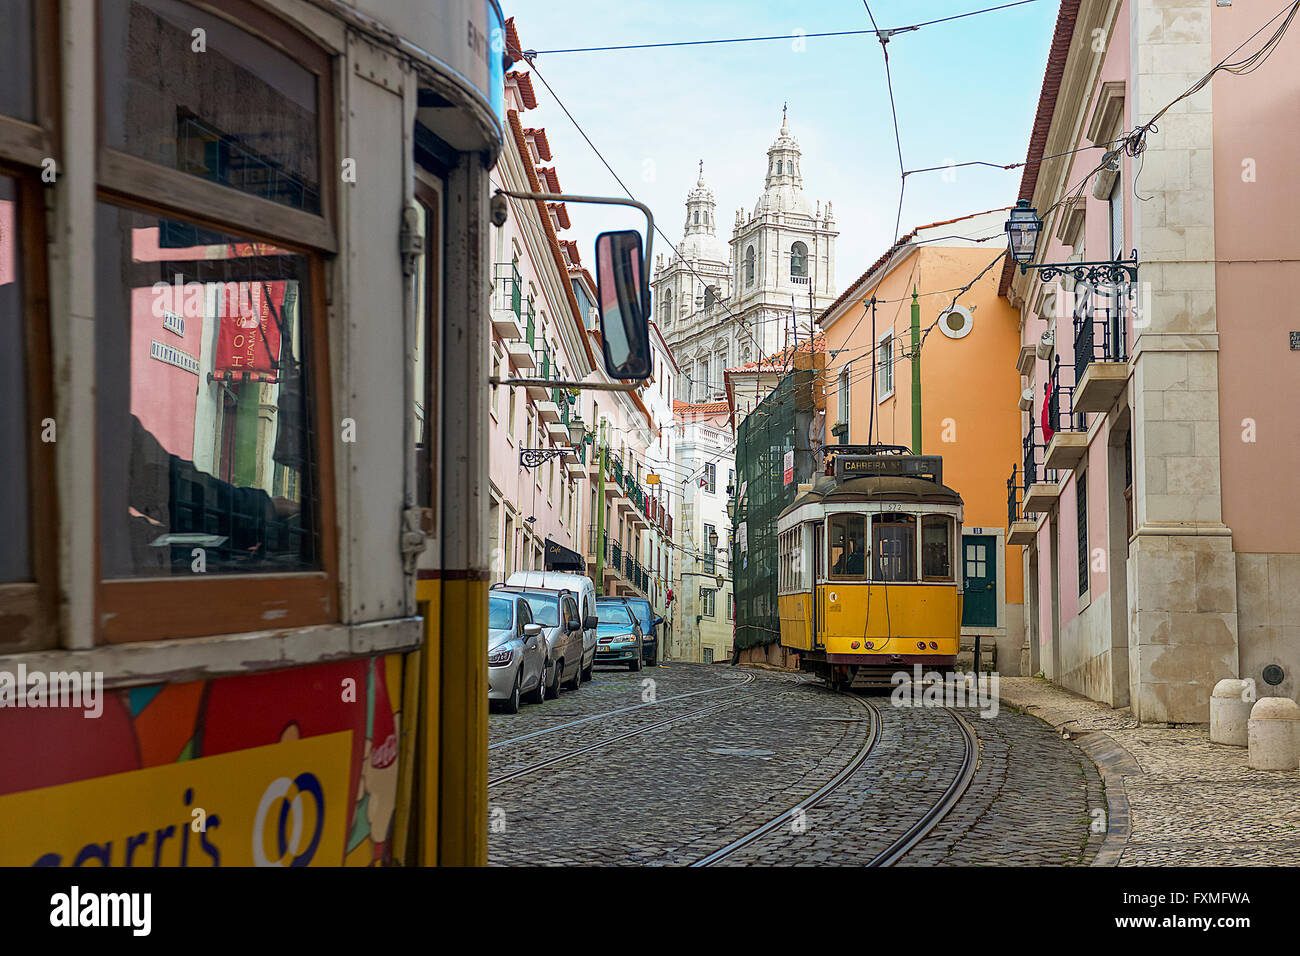 Tram in Lisbon, Portugal Stock Photo